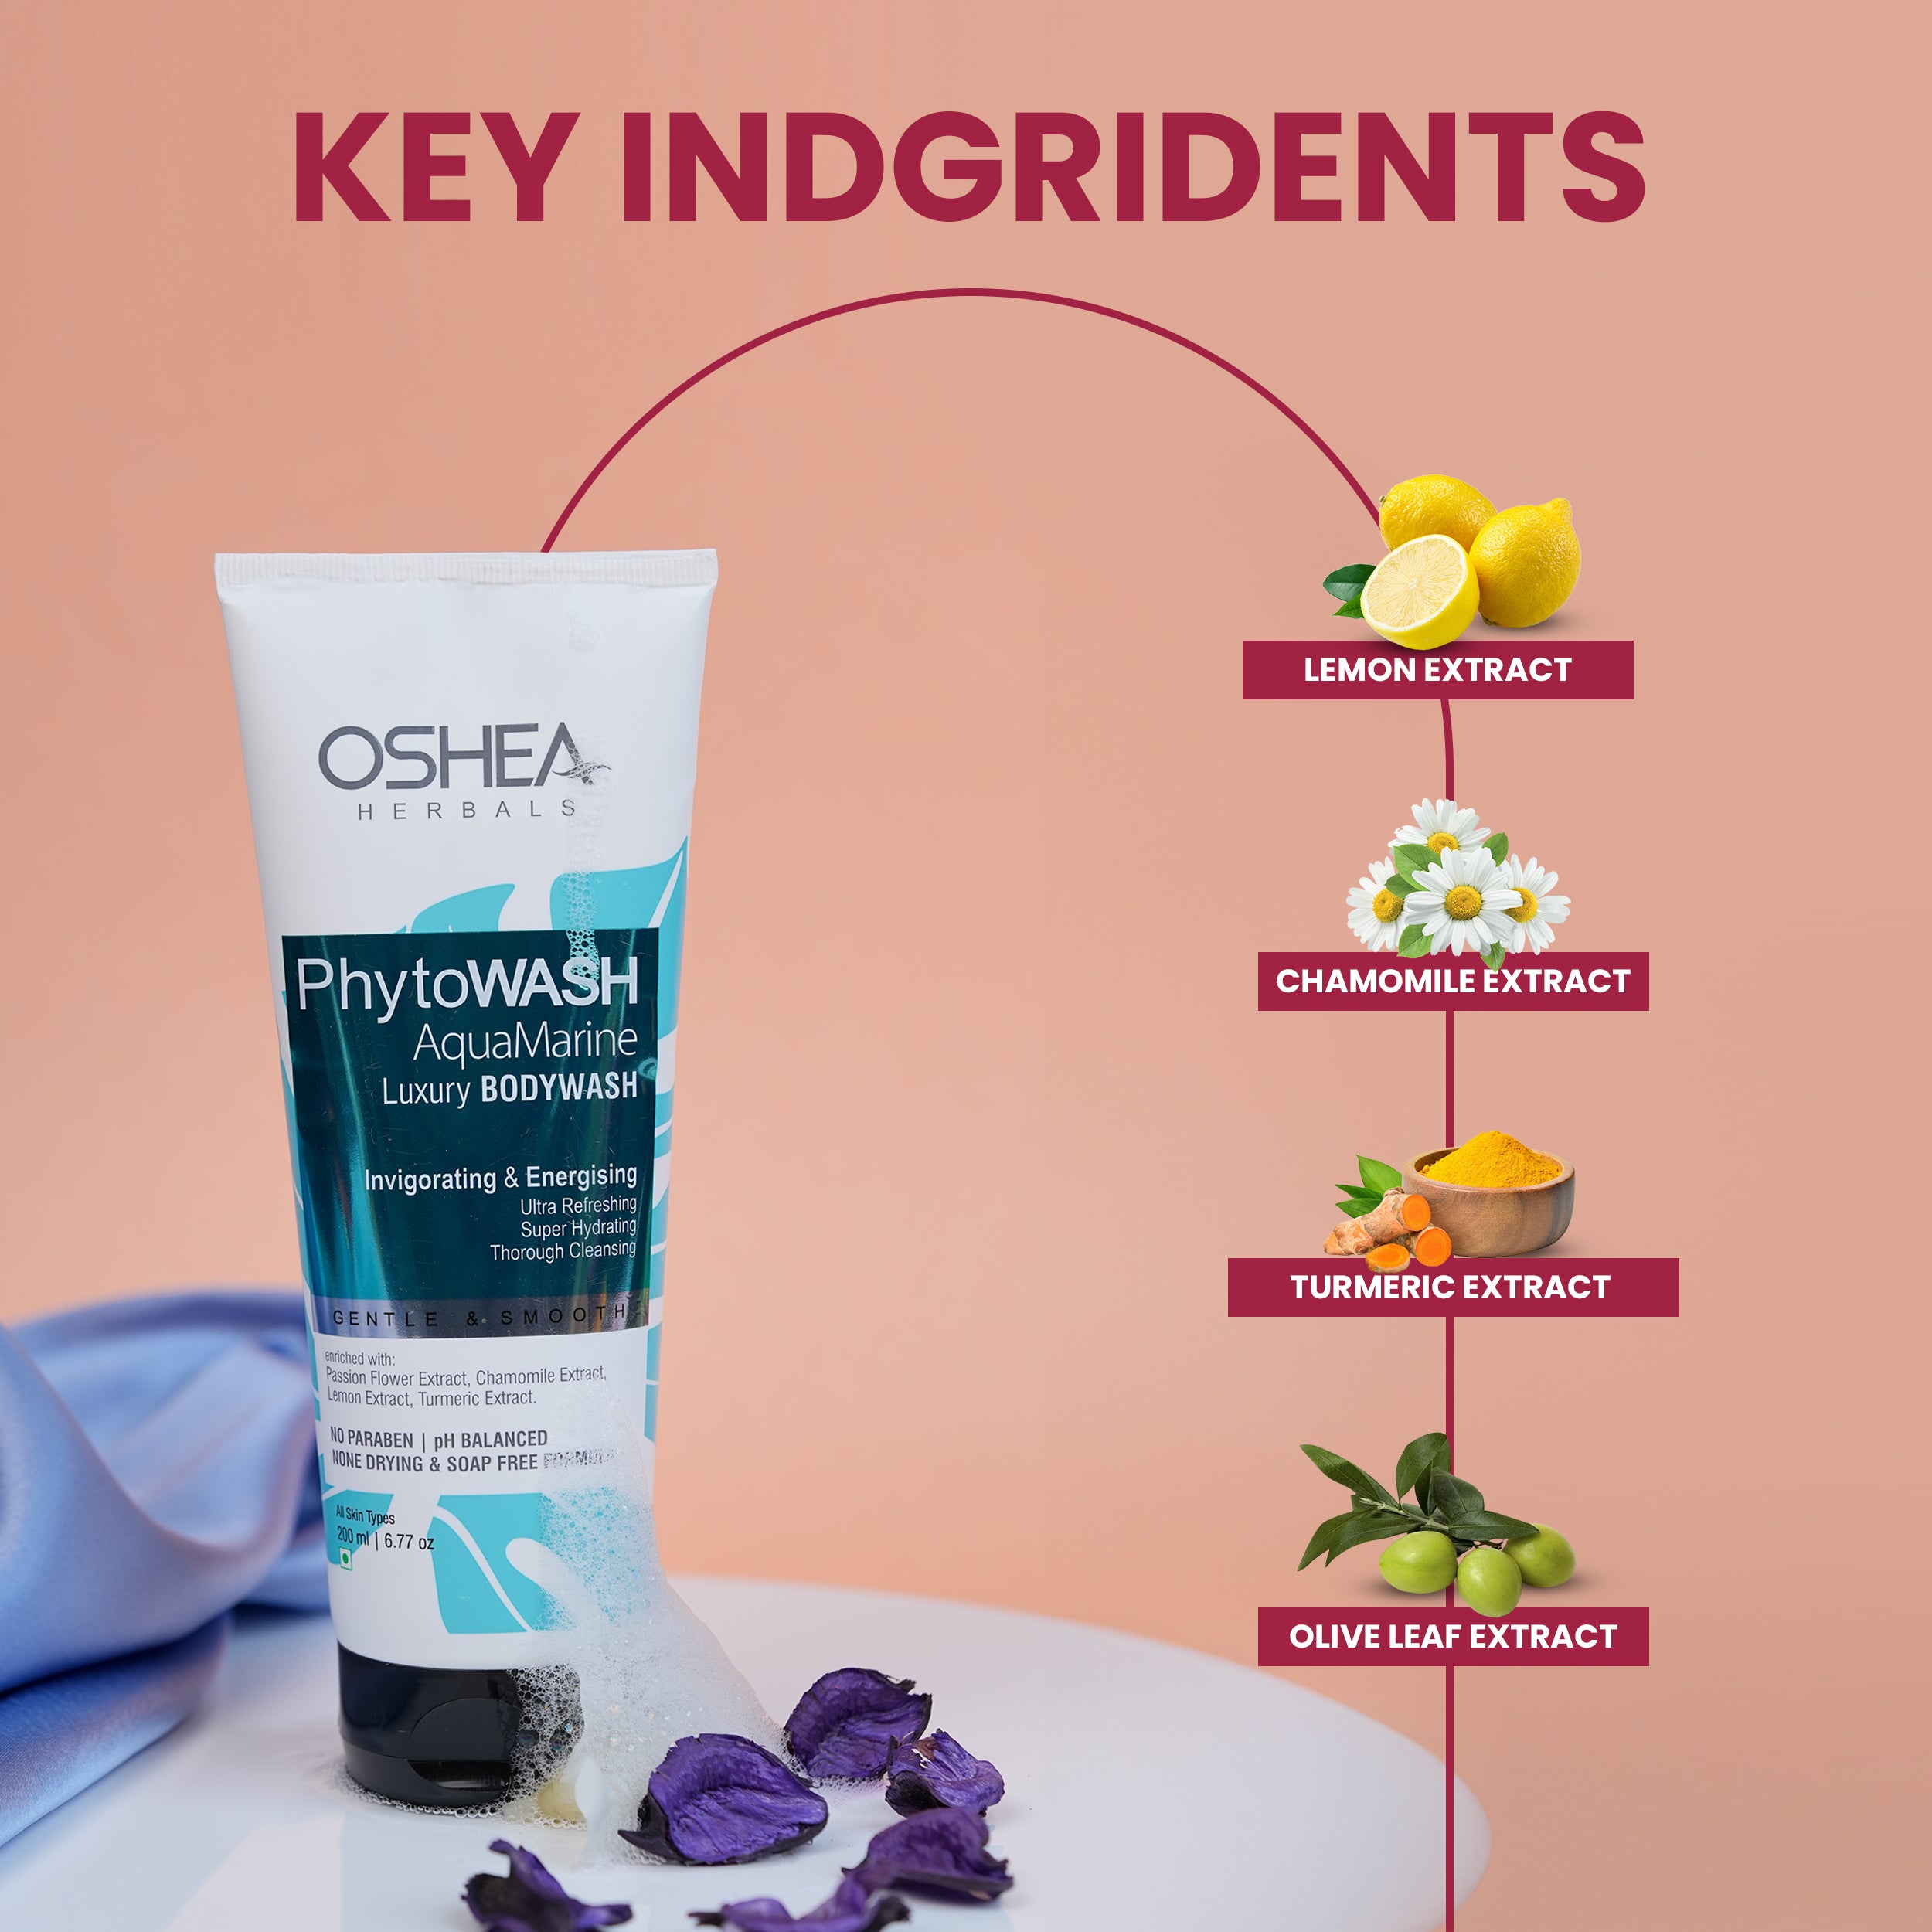 Key Ingredients Phytowash Aqua Marine Luxury Body wash Oshea Herbals